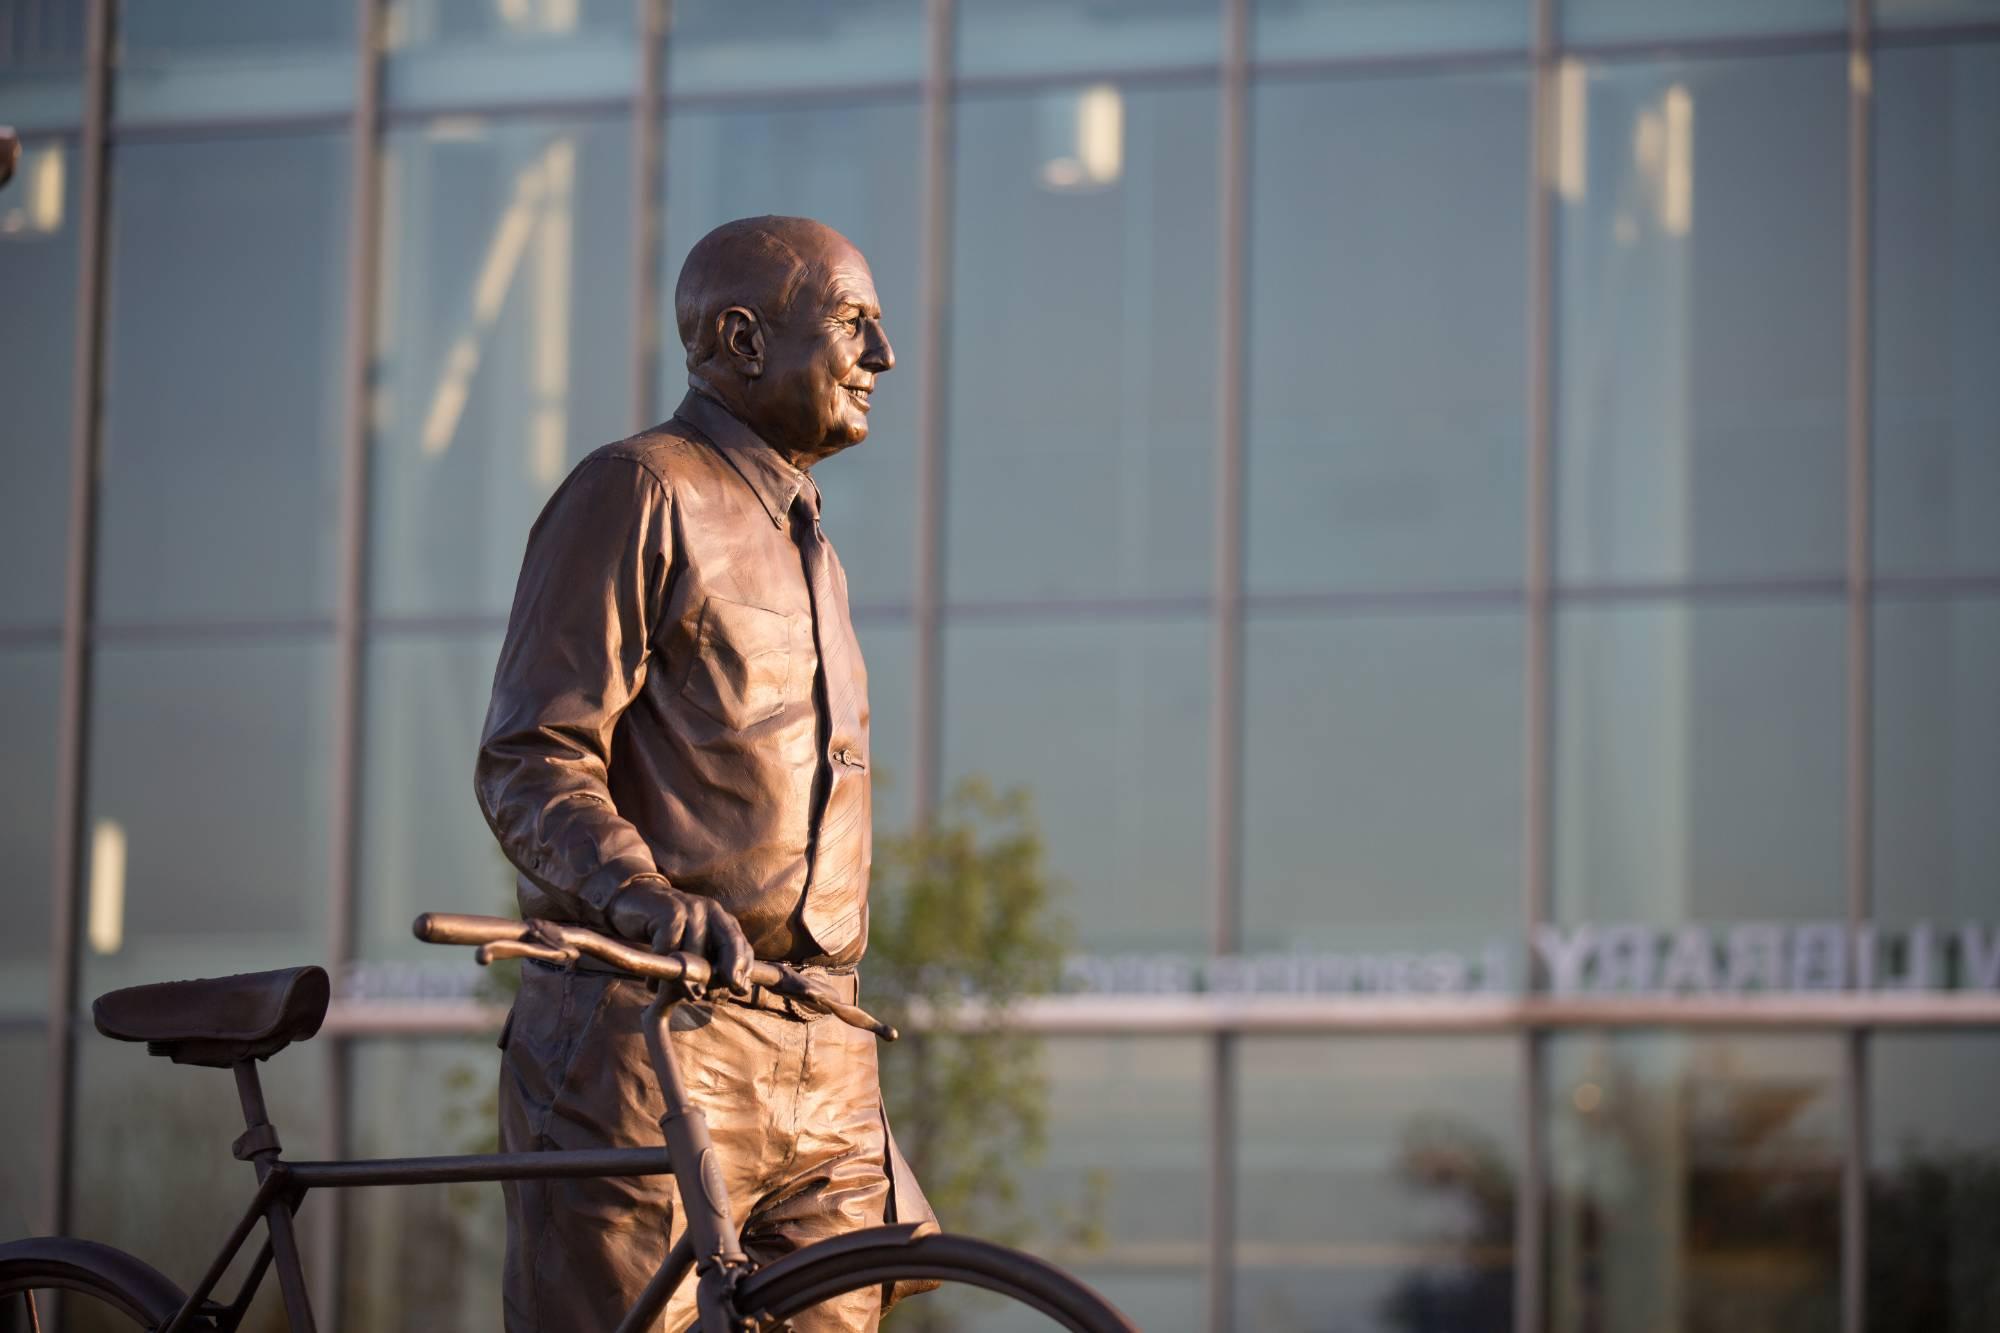 Statue of L. William Seidman with a bike